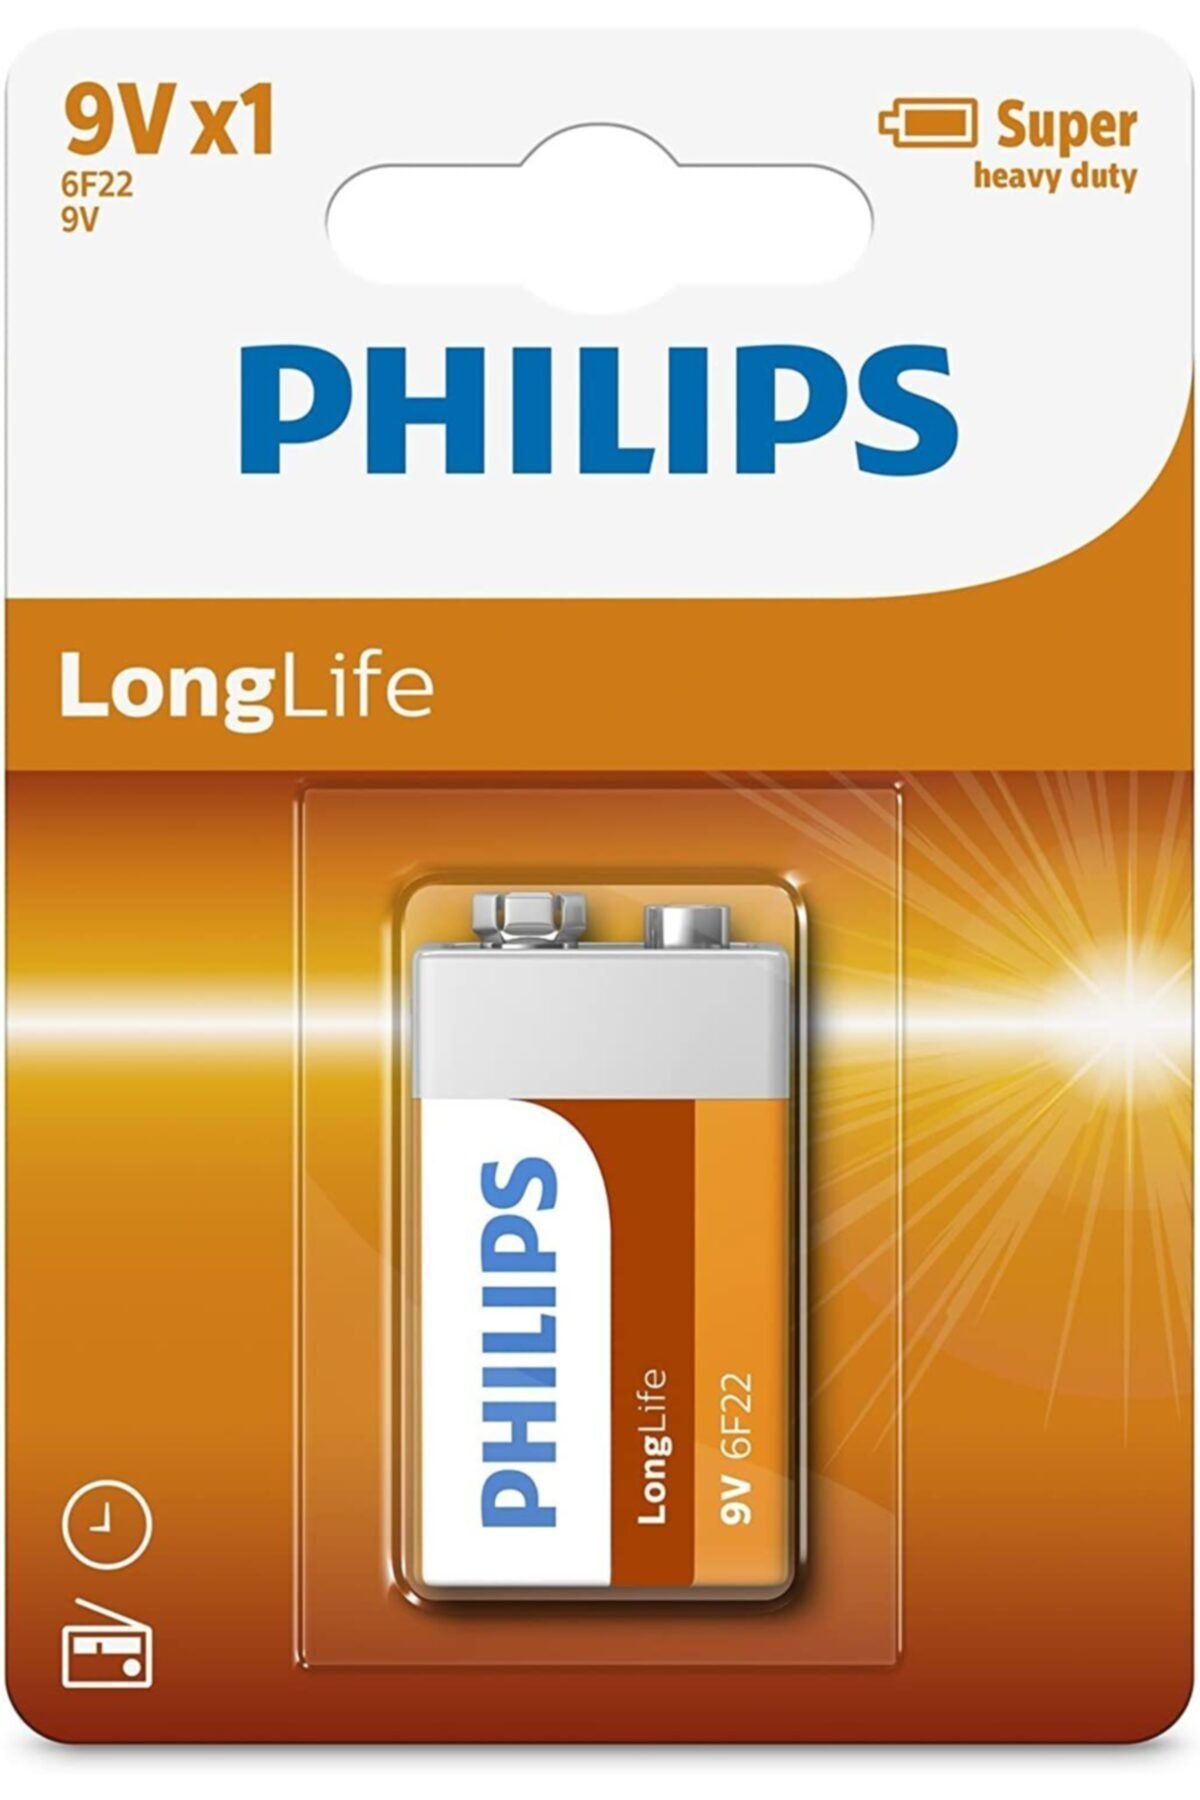 Philips LongLife 9V X1